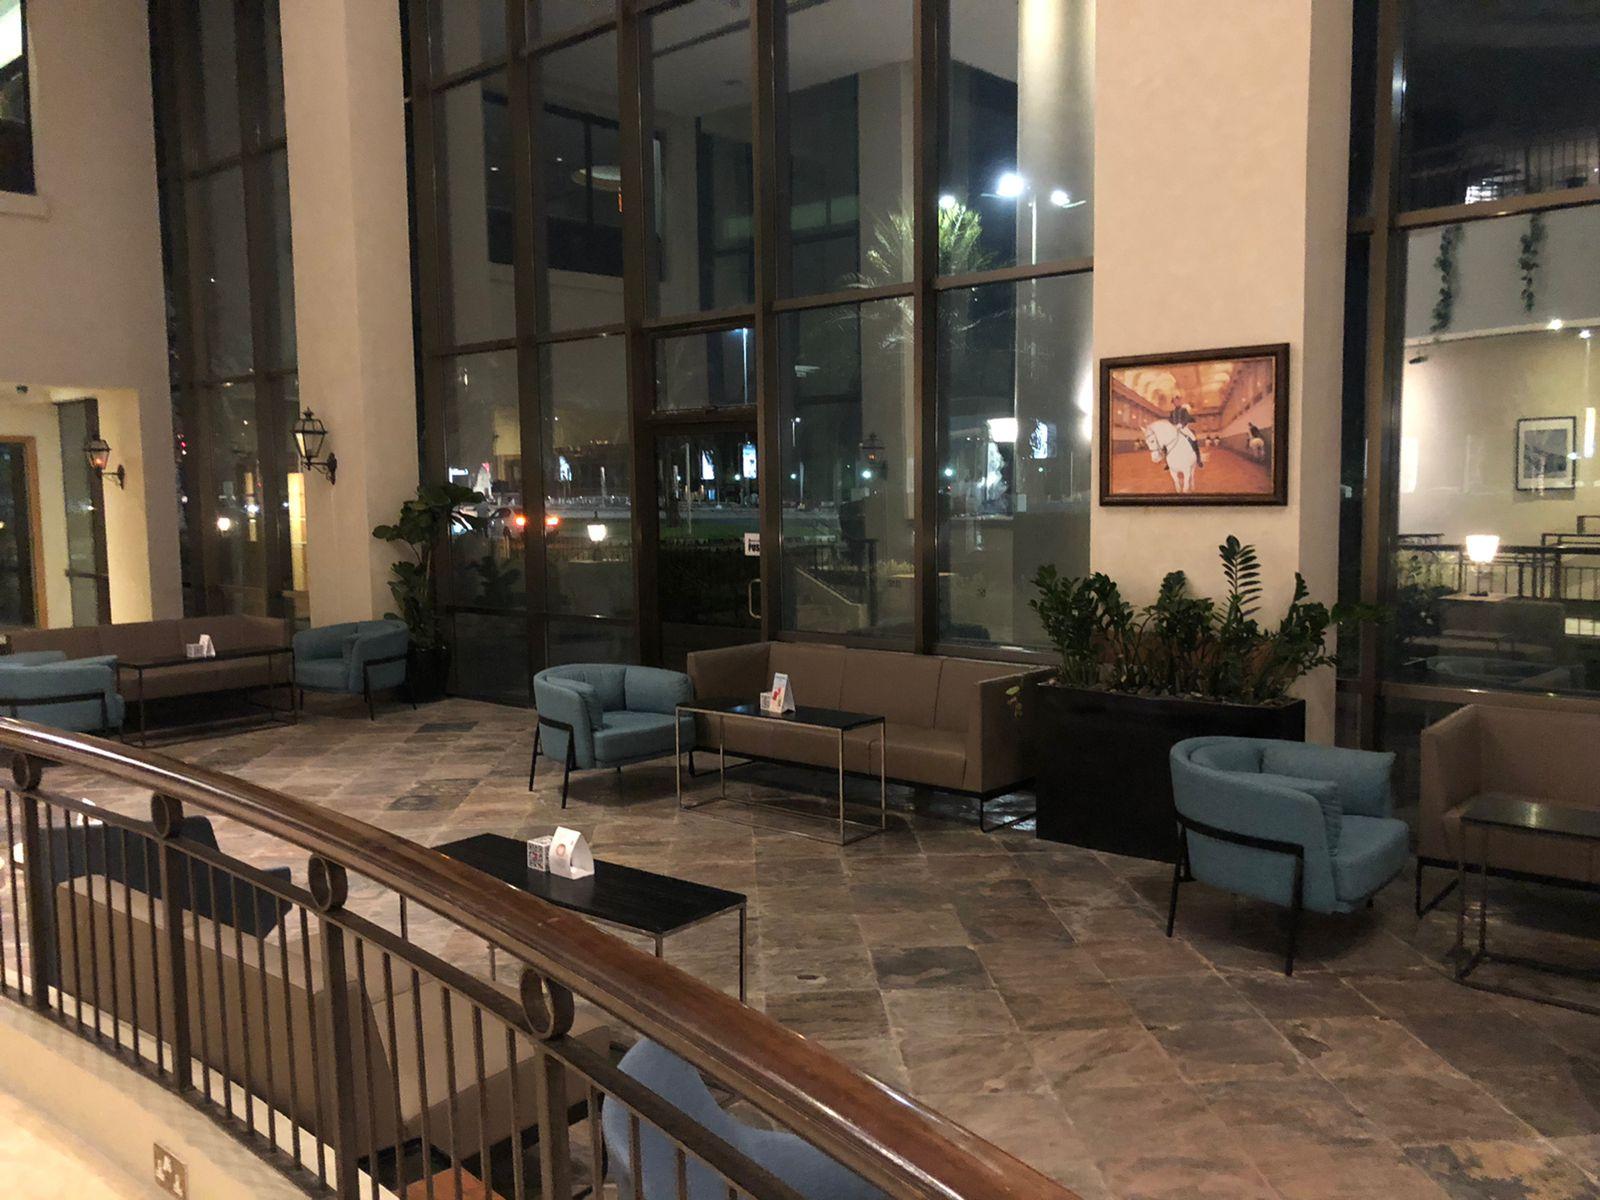 Radisson Blu Hotel & Resort, Abu Dhabi Corniche Executive Club Lounge Tables